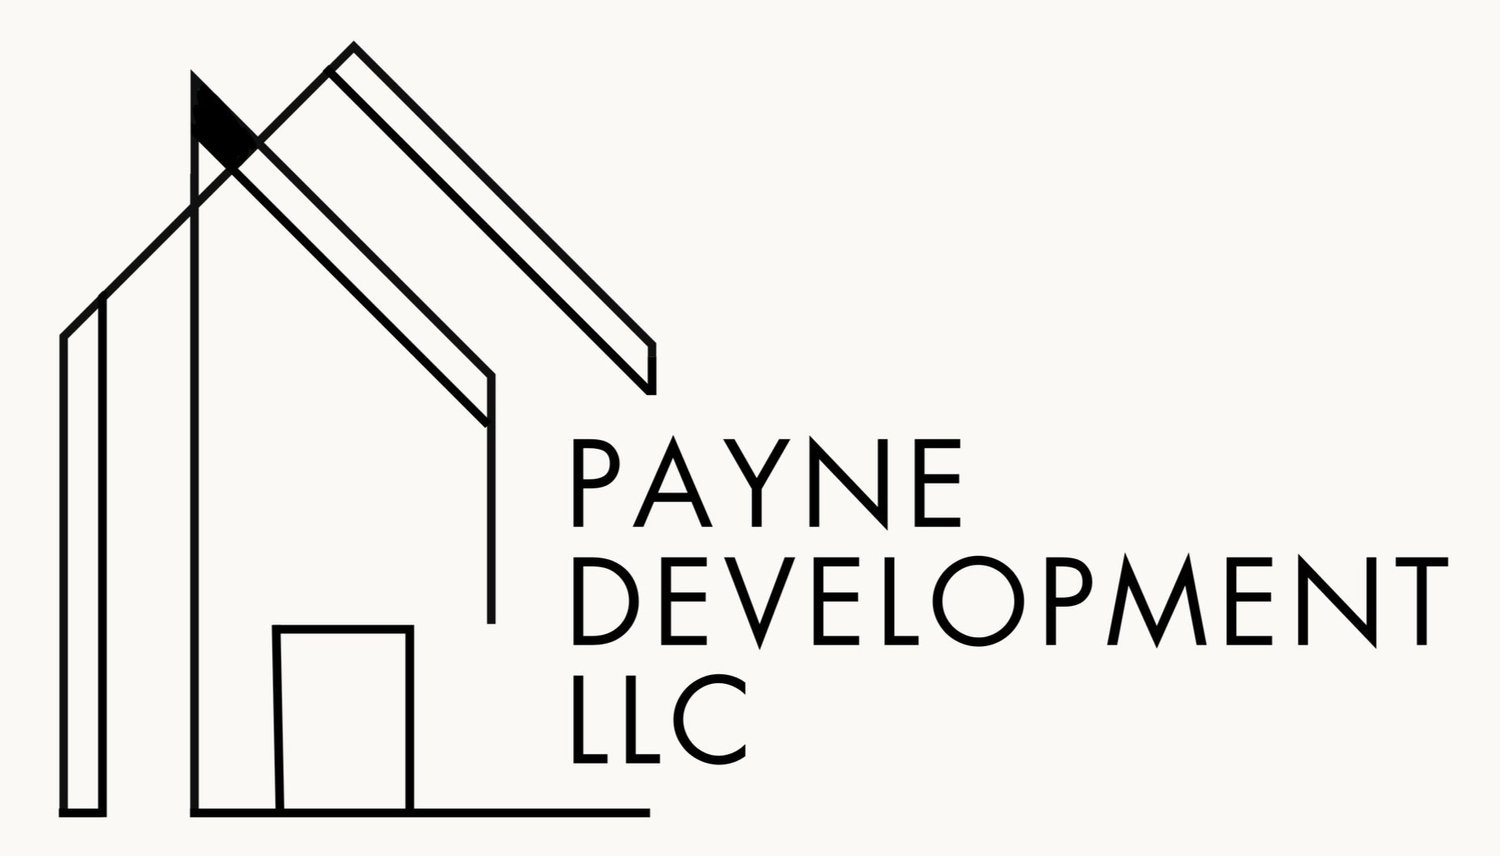 PAYNE DEVELOPMENT LLC